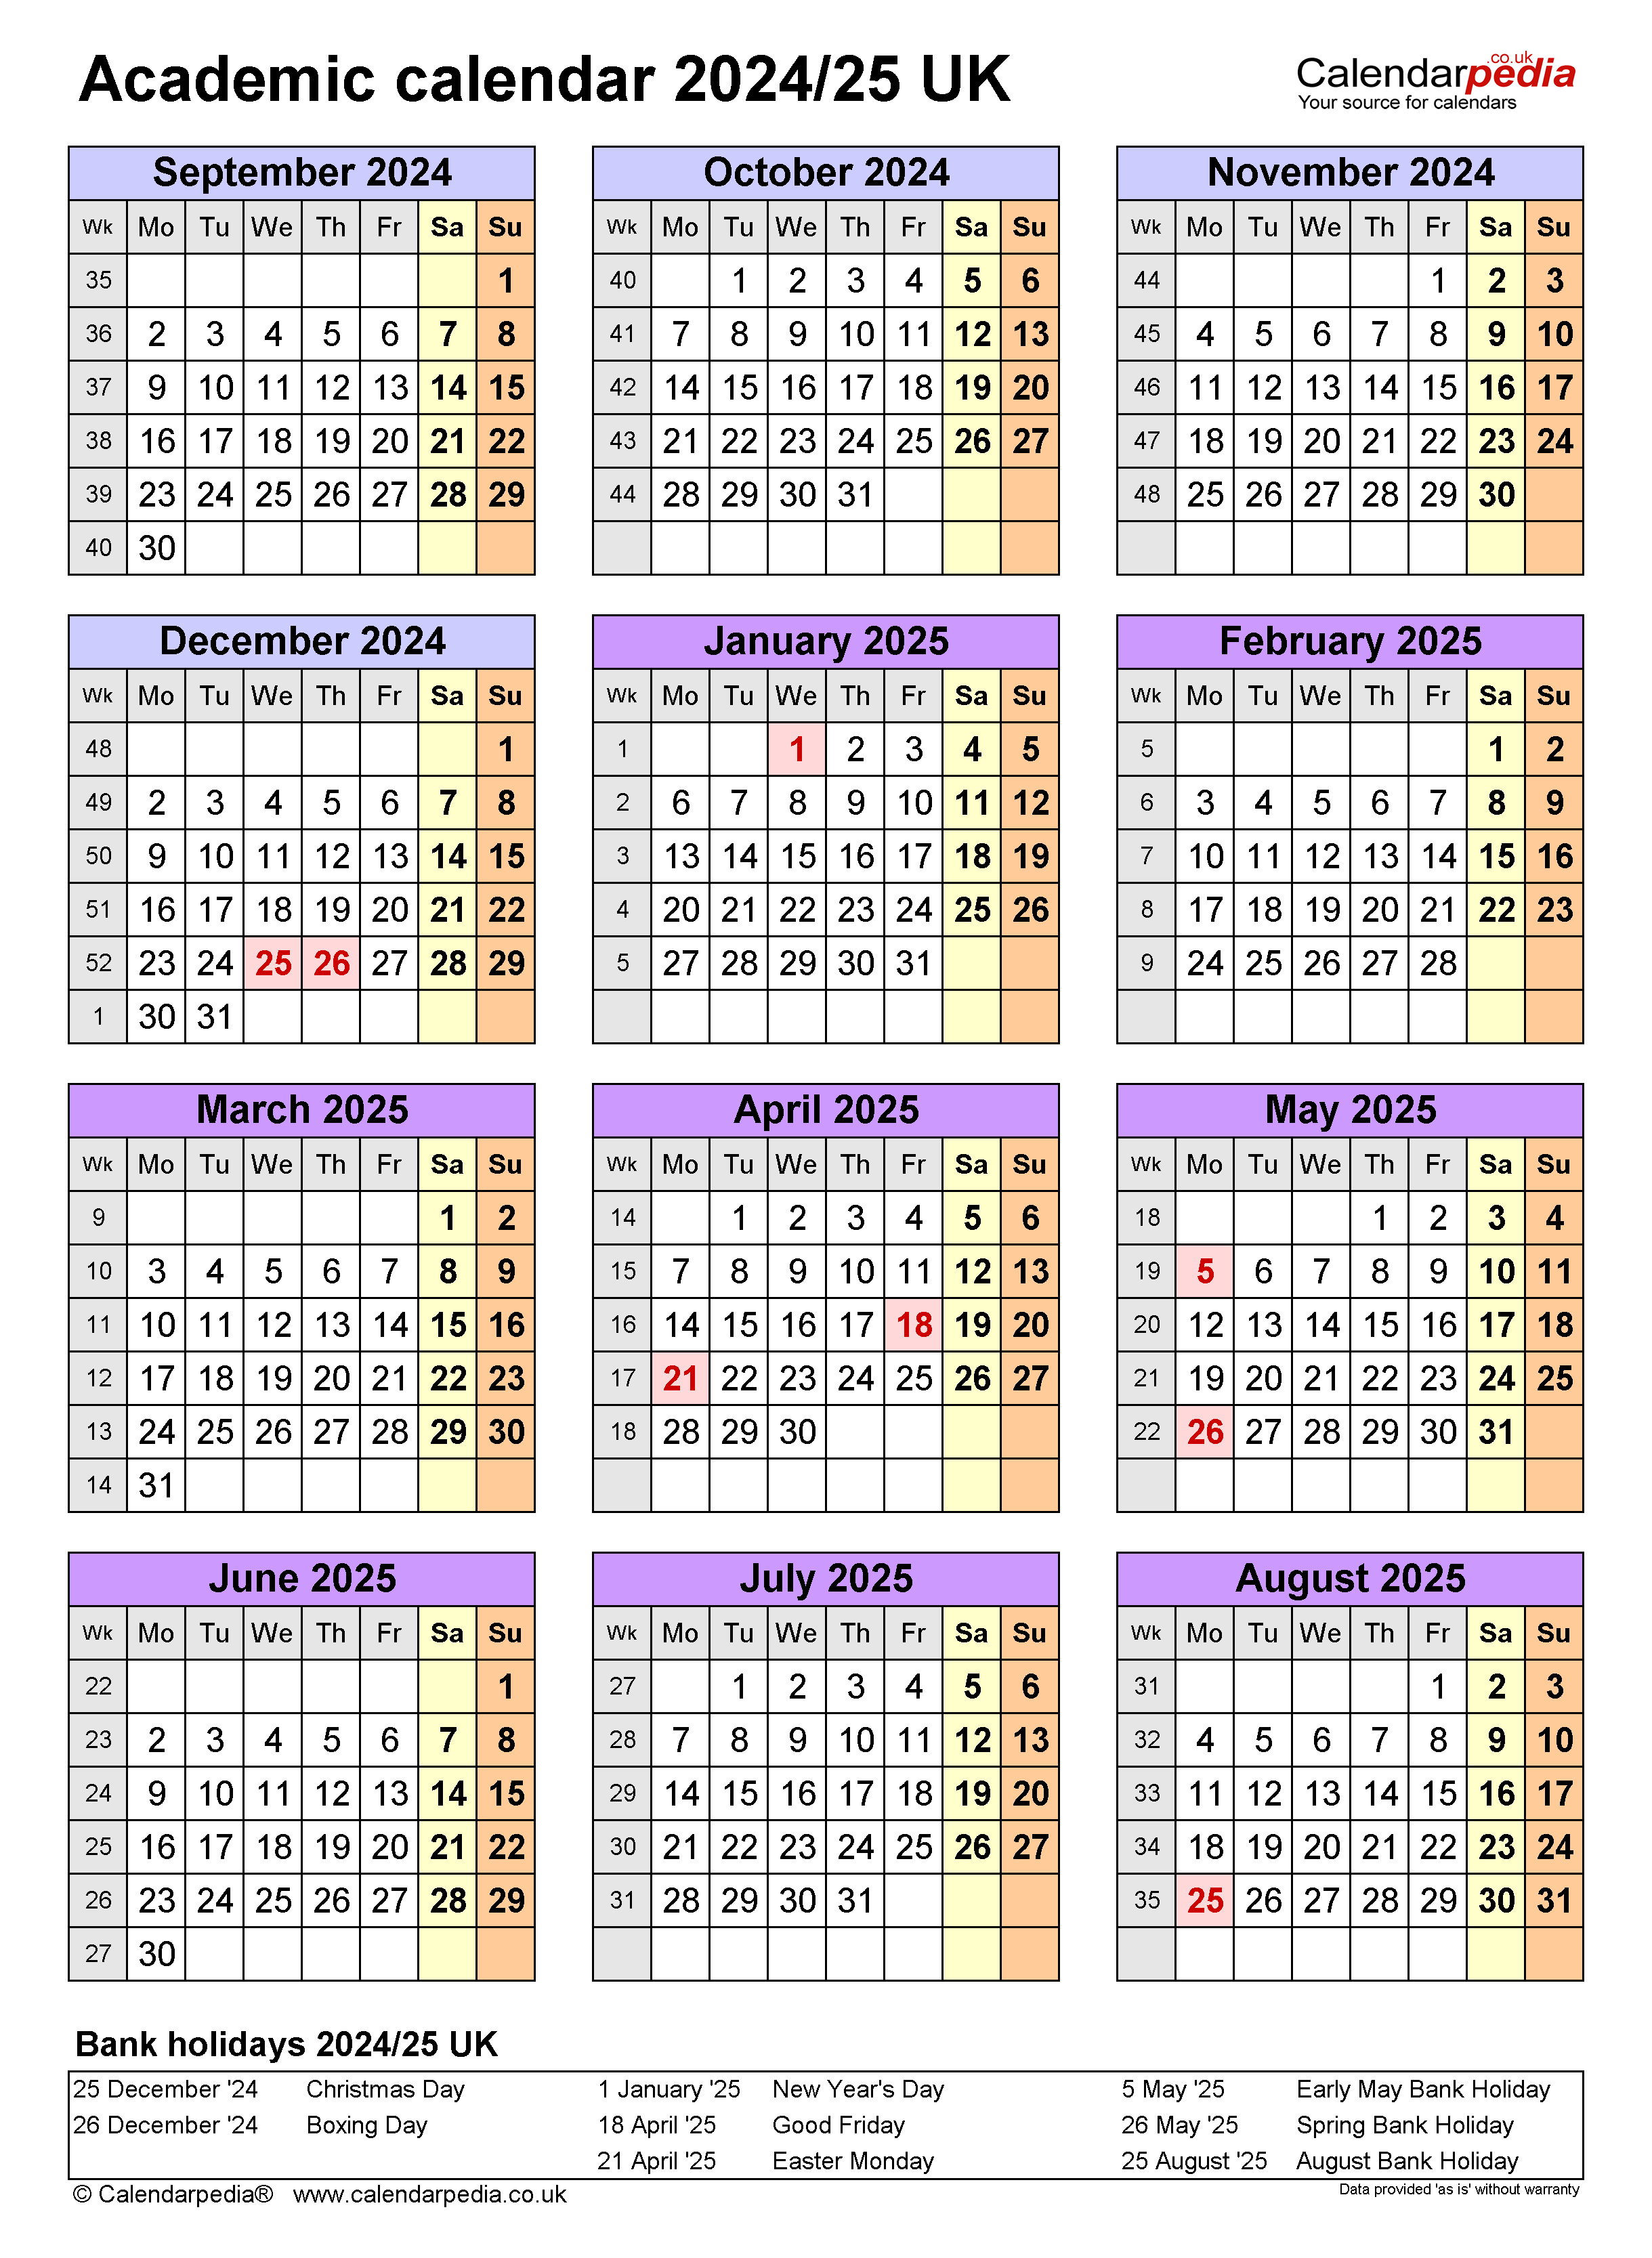 Uconn Academic Calendar 2025